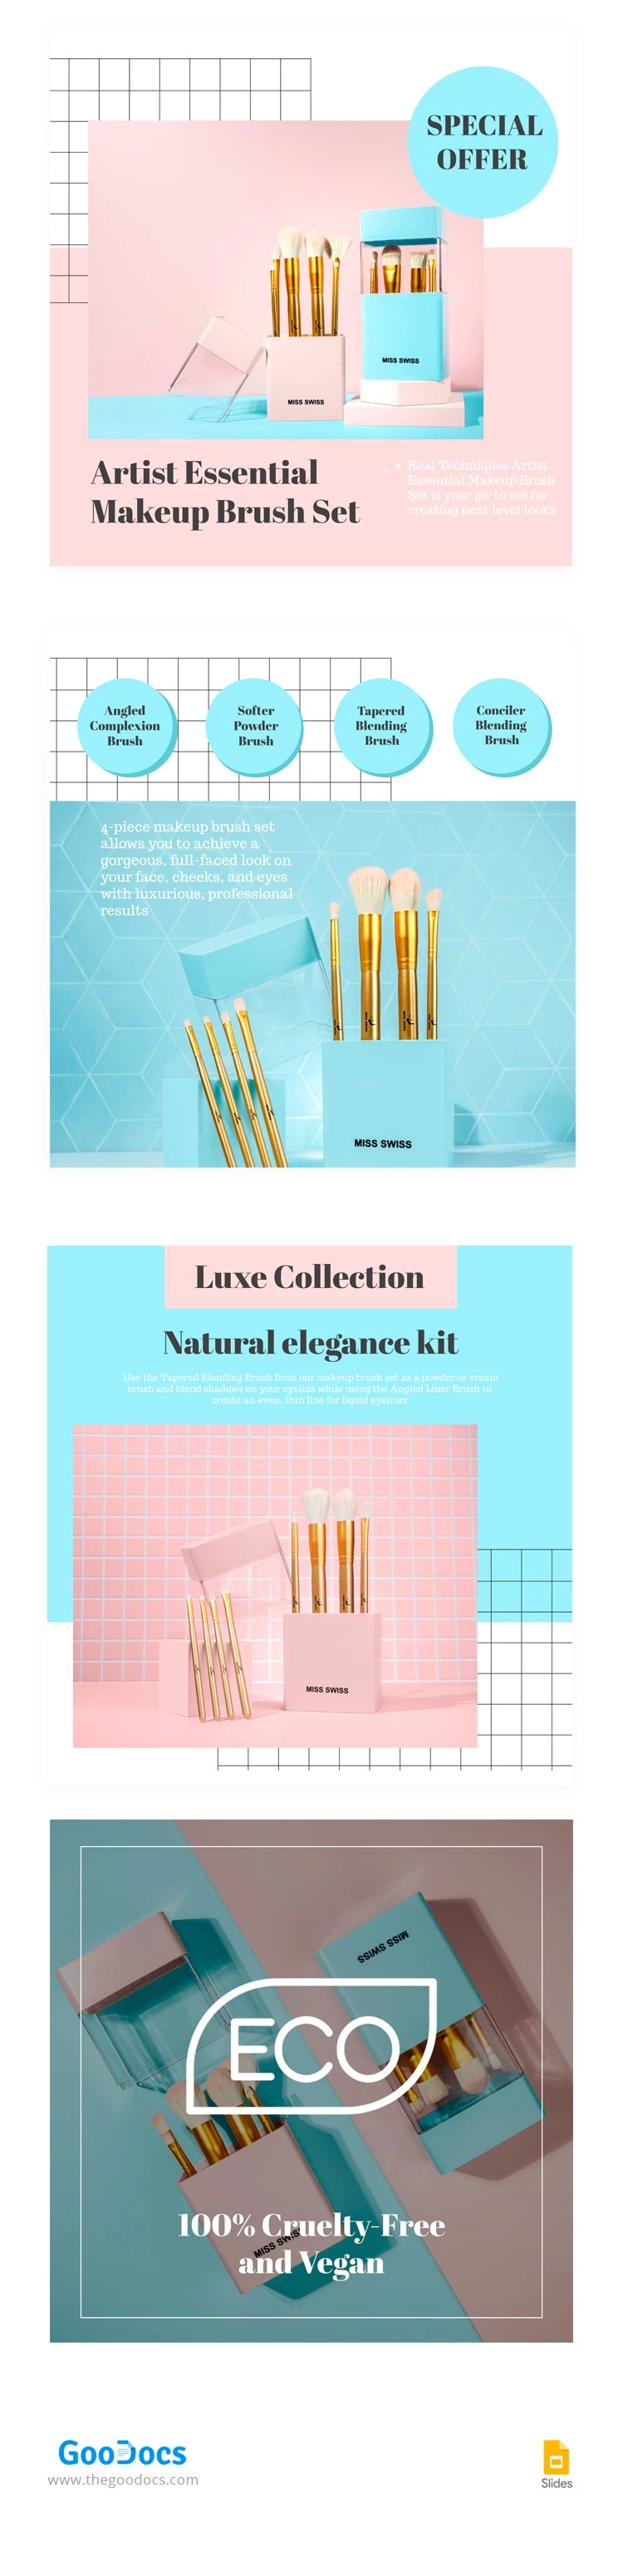 Beauty Amazon Product - free Google Docs Template - 10064208